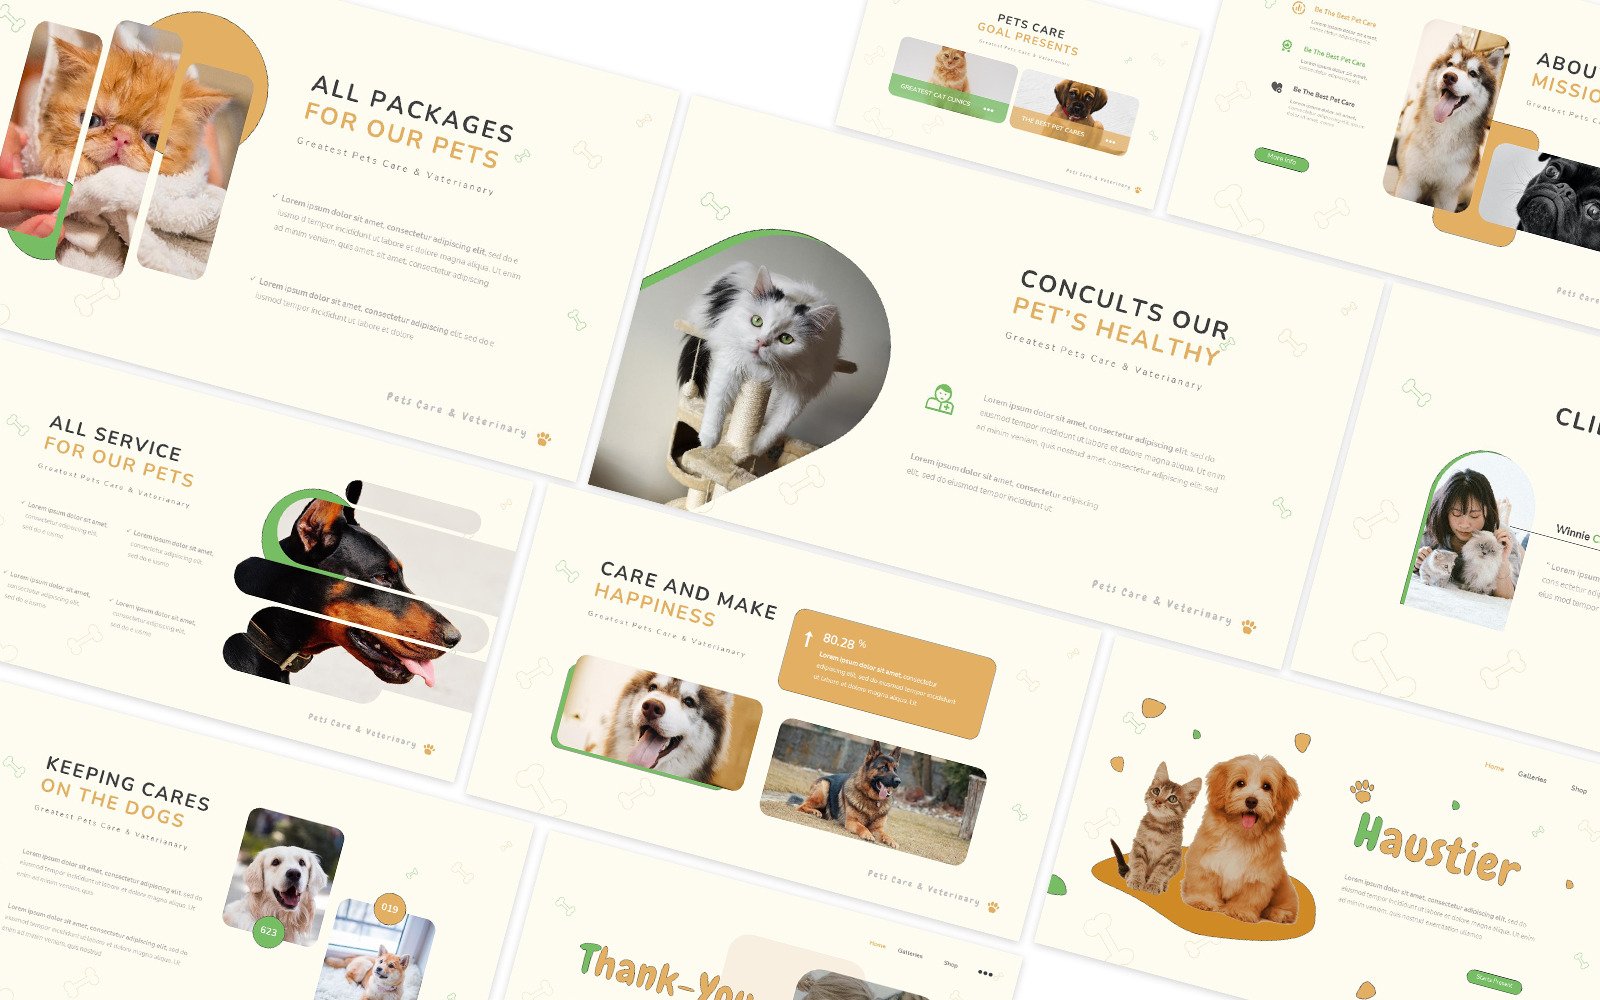 Haustier Pet Care Powerpoint Template - TemplateMonster